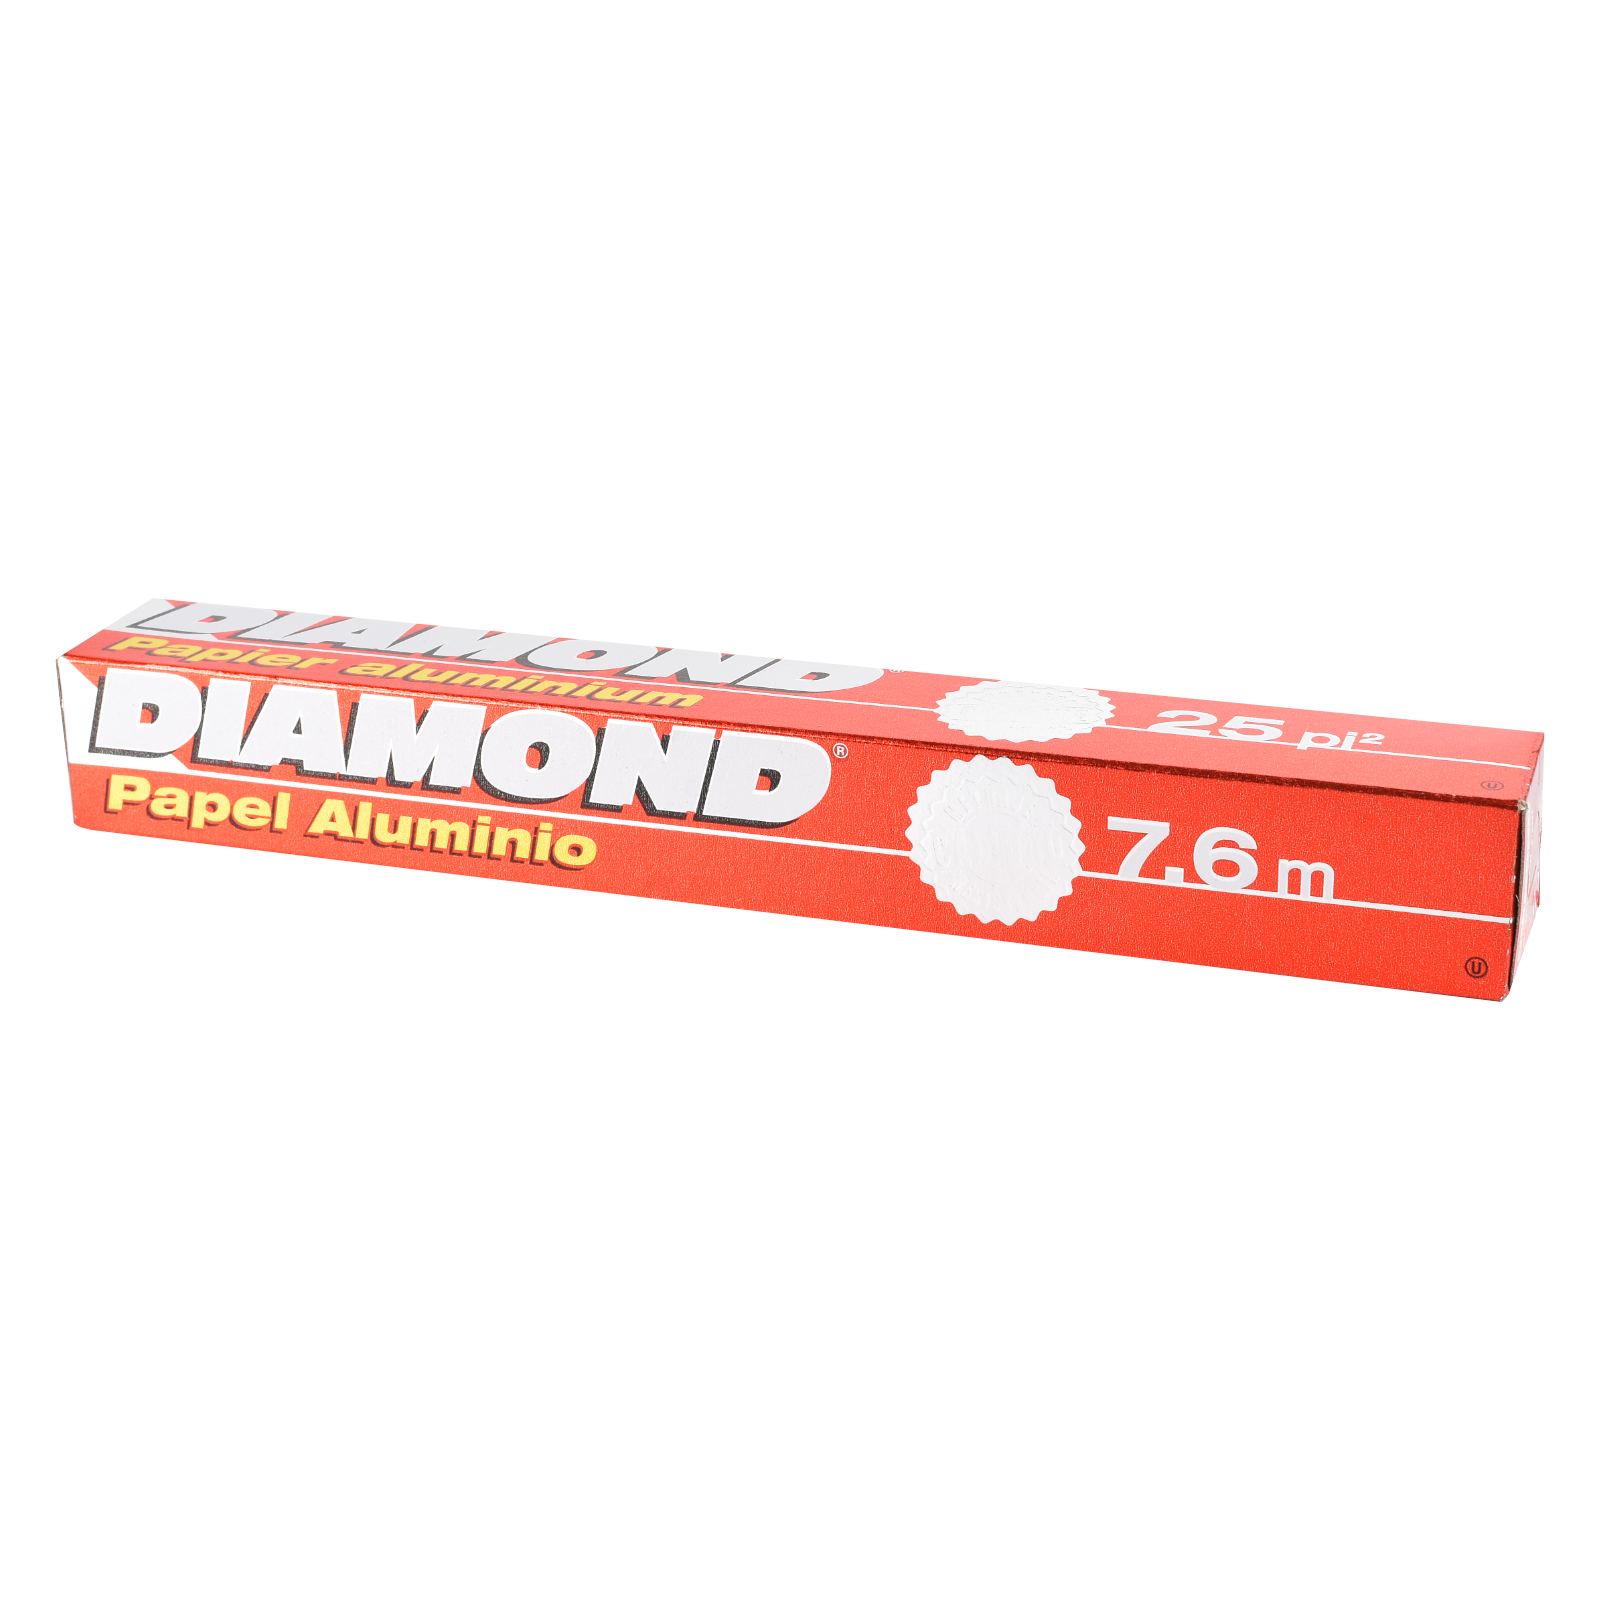 diamond papel aluminio 7.6m 2.png